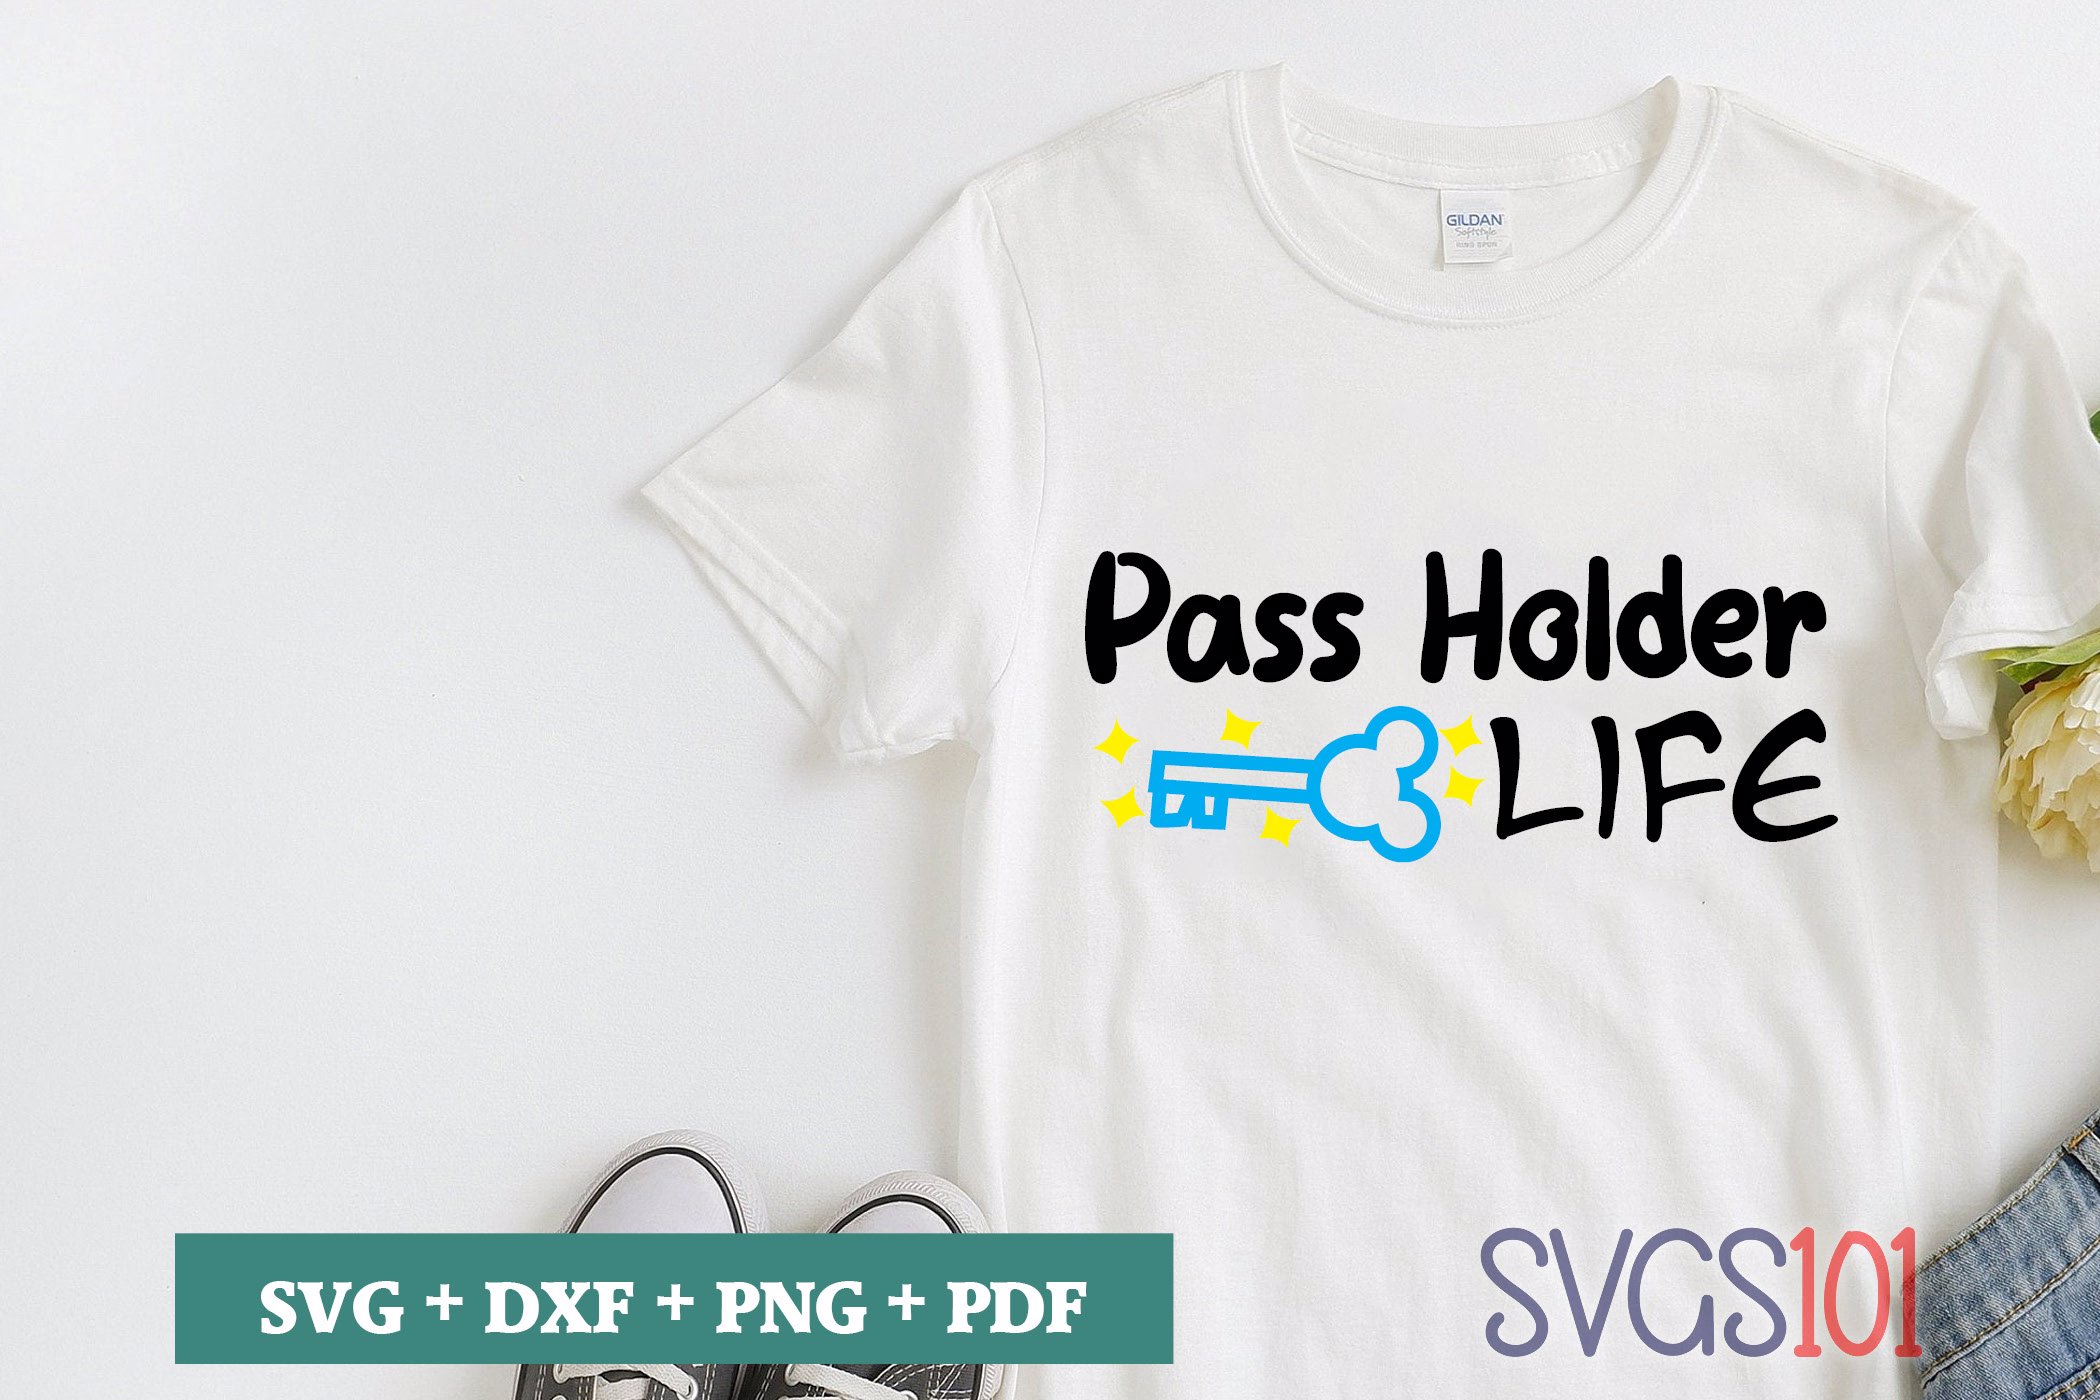 Pass Holder Life